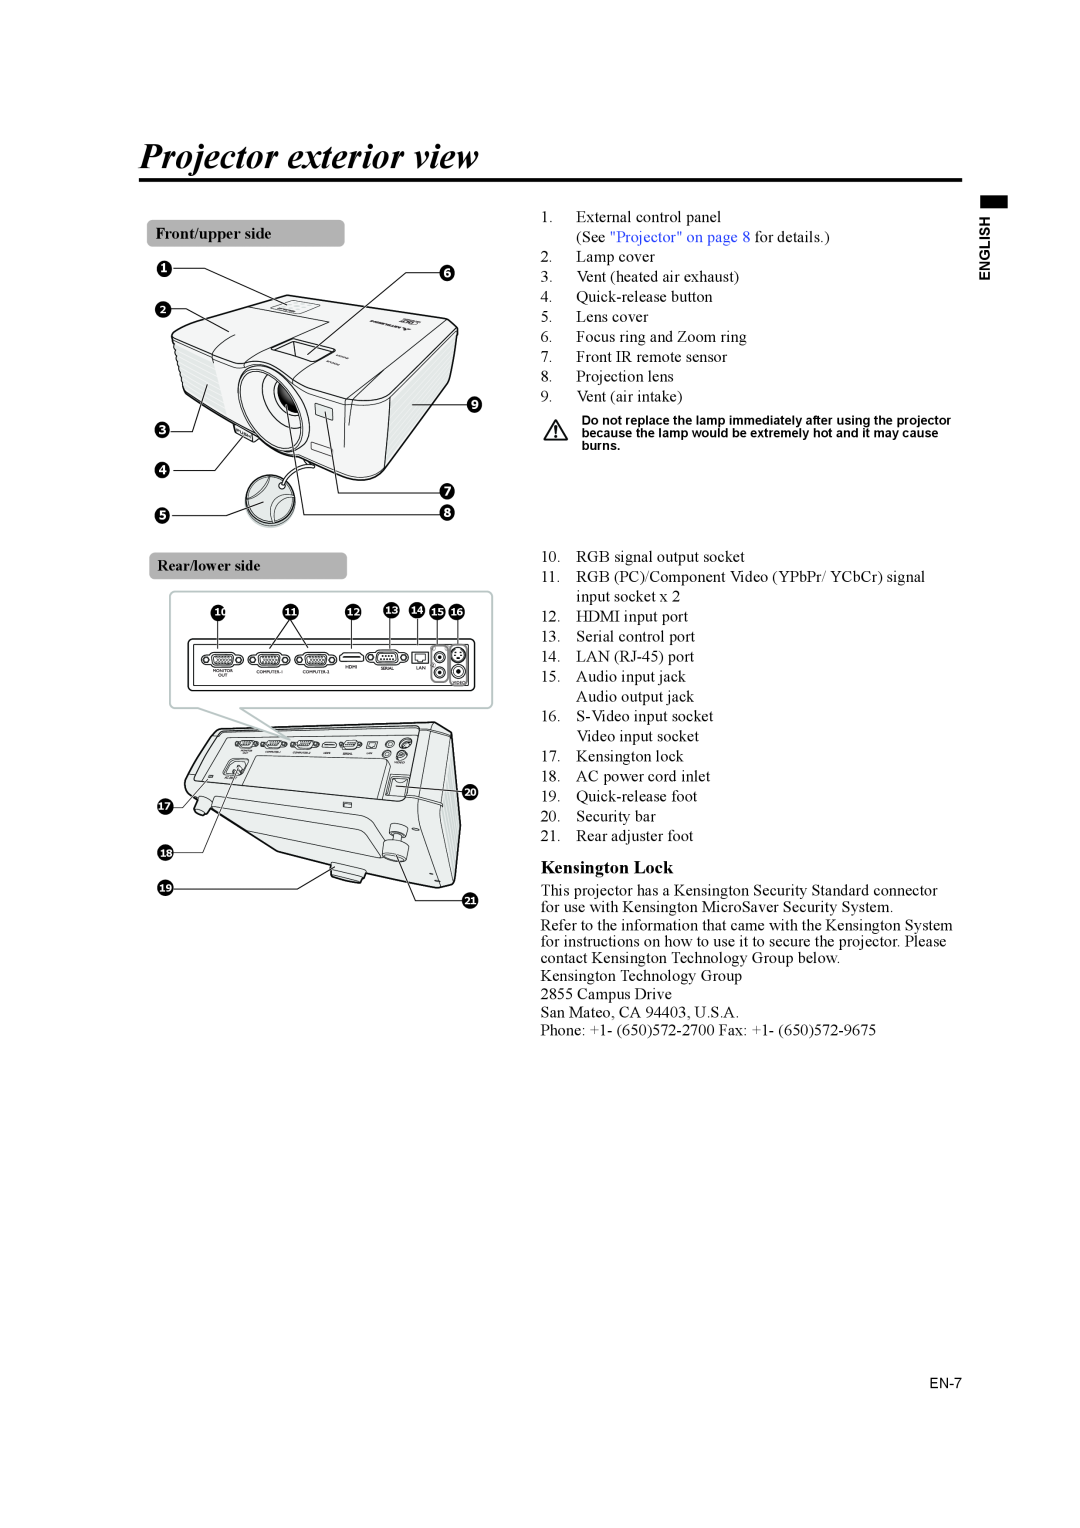 Mitsubishi Electronics EW270U user manual Projector exterior view, Kensington Lock, Front/upper side 